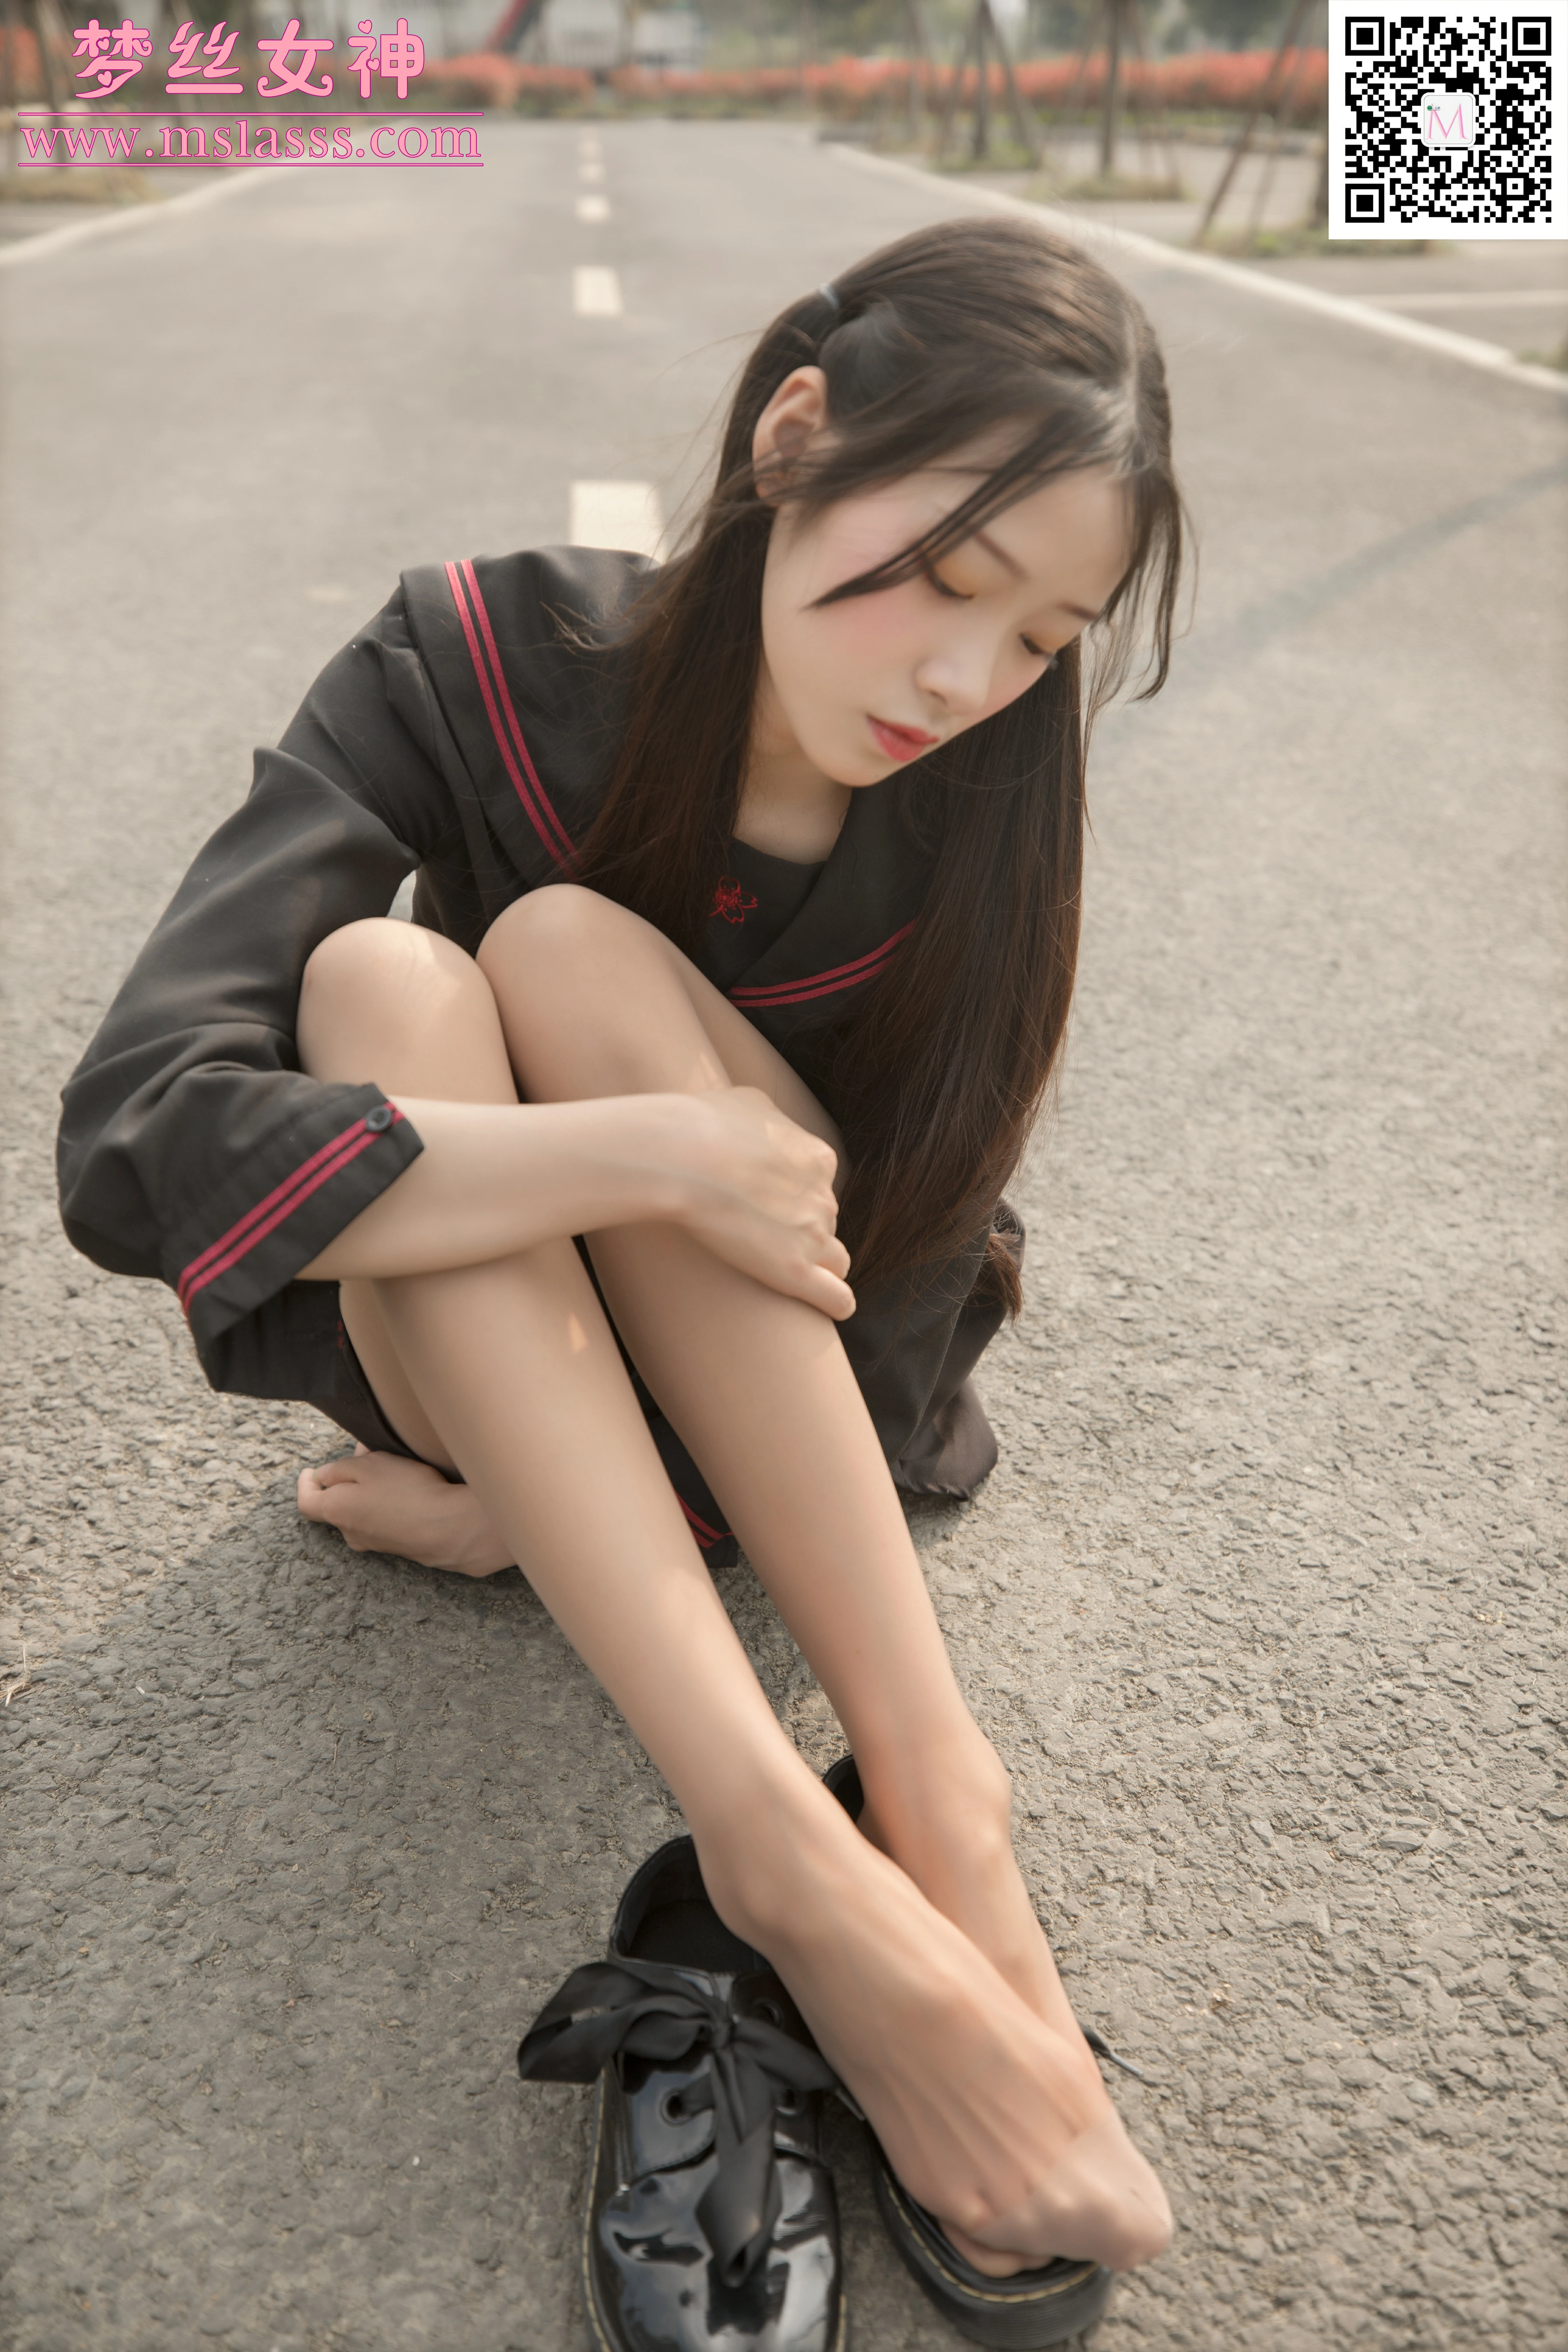 [MSLASS梦丝女神]NO.104 《纤细的脚丫》 诗琪 黑色日本高中女生制服与短裙加肉色丝袜美腿性感私房写真集,